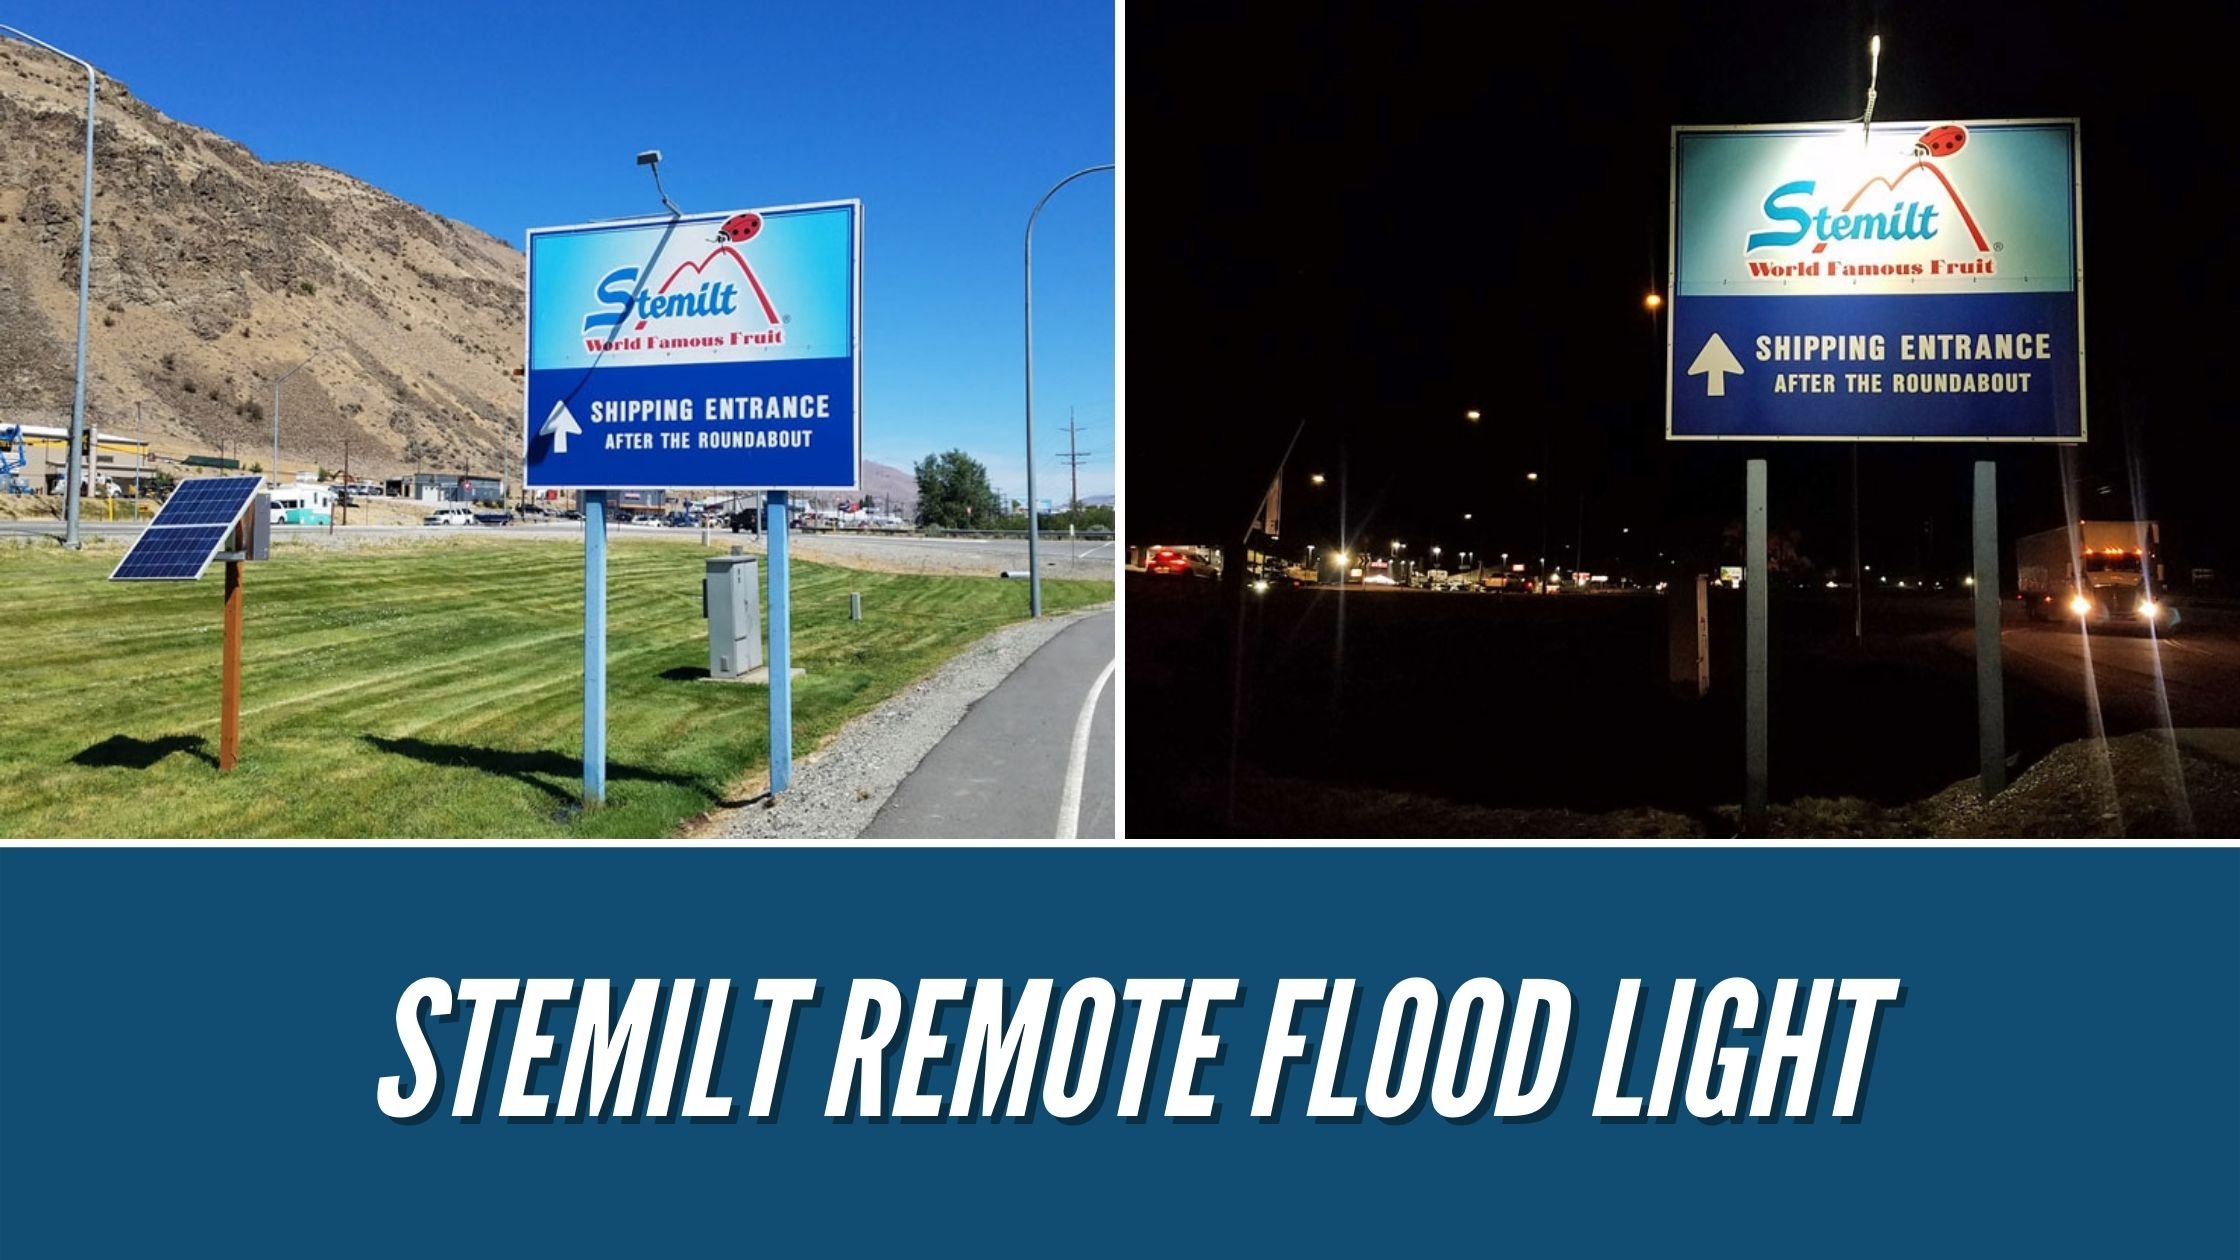 Stemilt Remote Flood Light